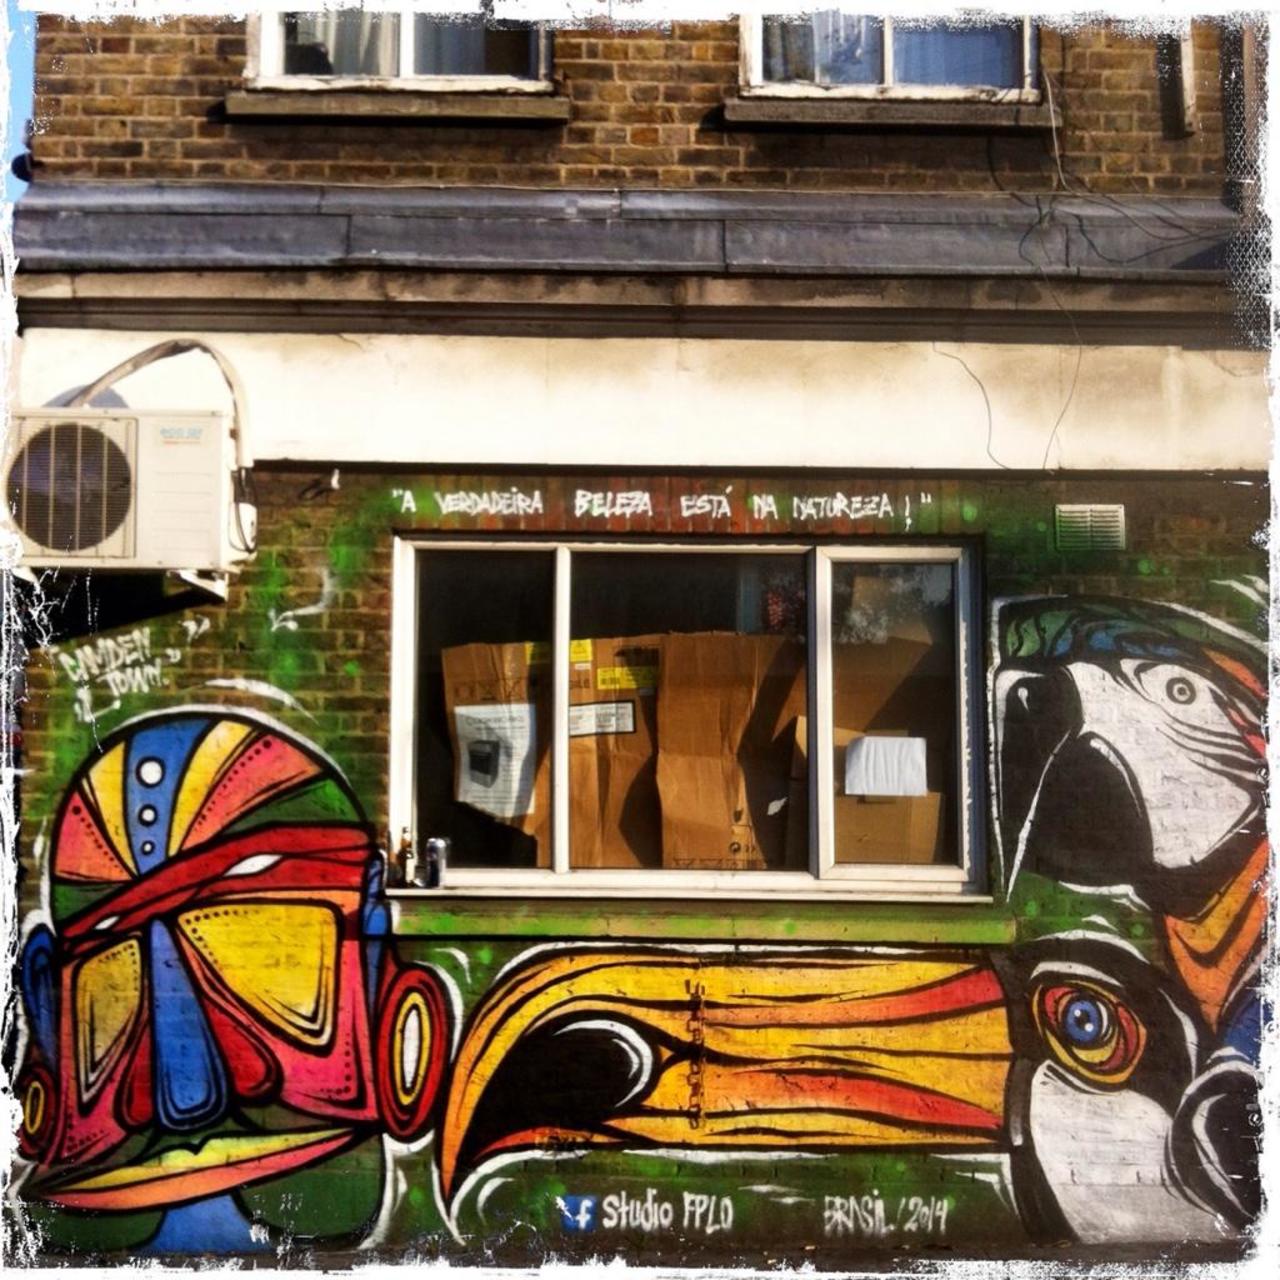 Not often you see a toucan in London!

Lovely @studiofplo Streetart in Camden 

#art #graffiti @streetart_ldn http://t.co/DMmkDkGaoS